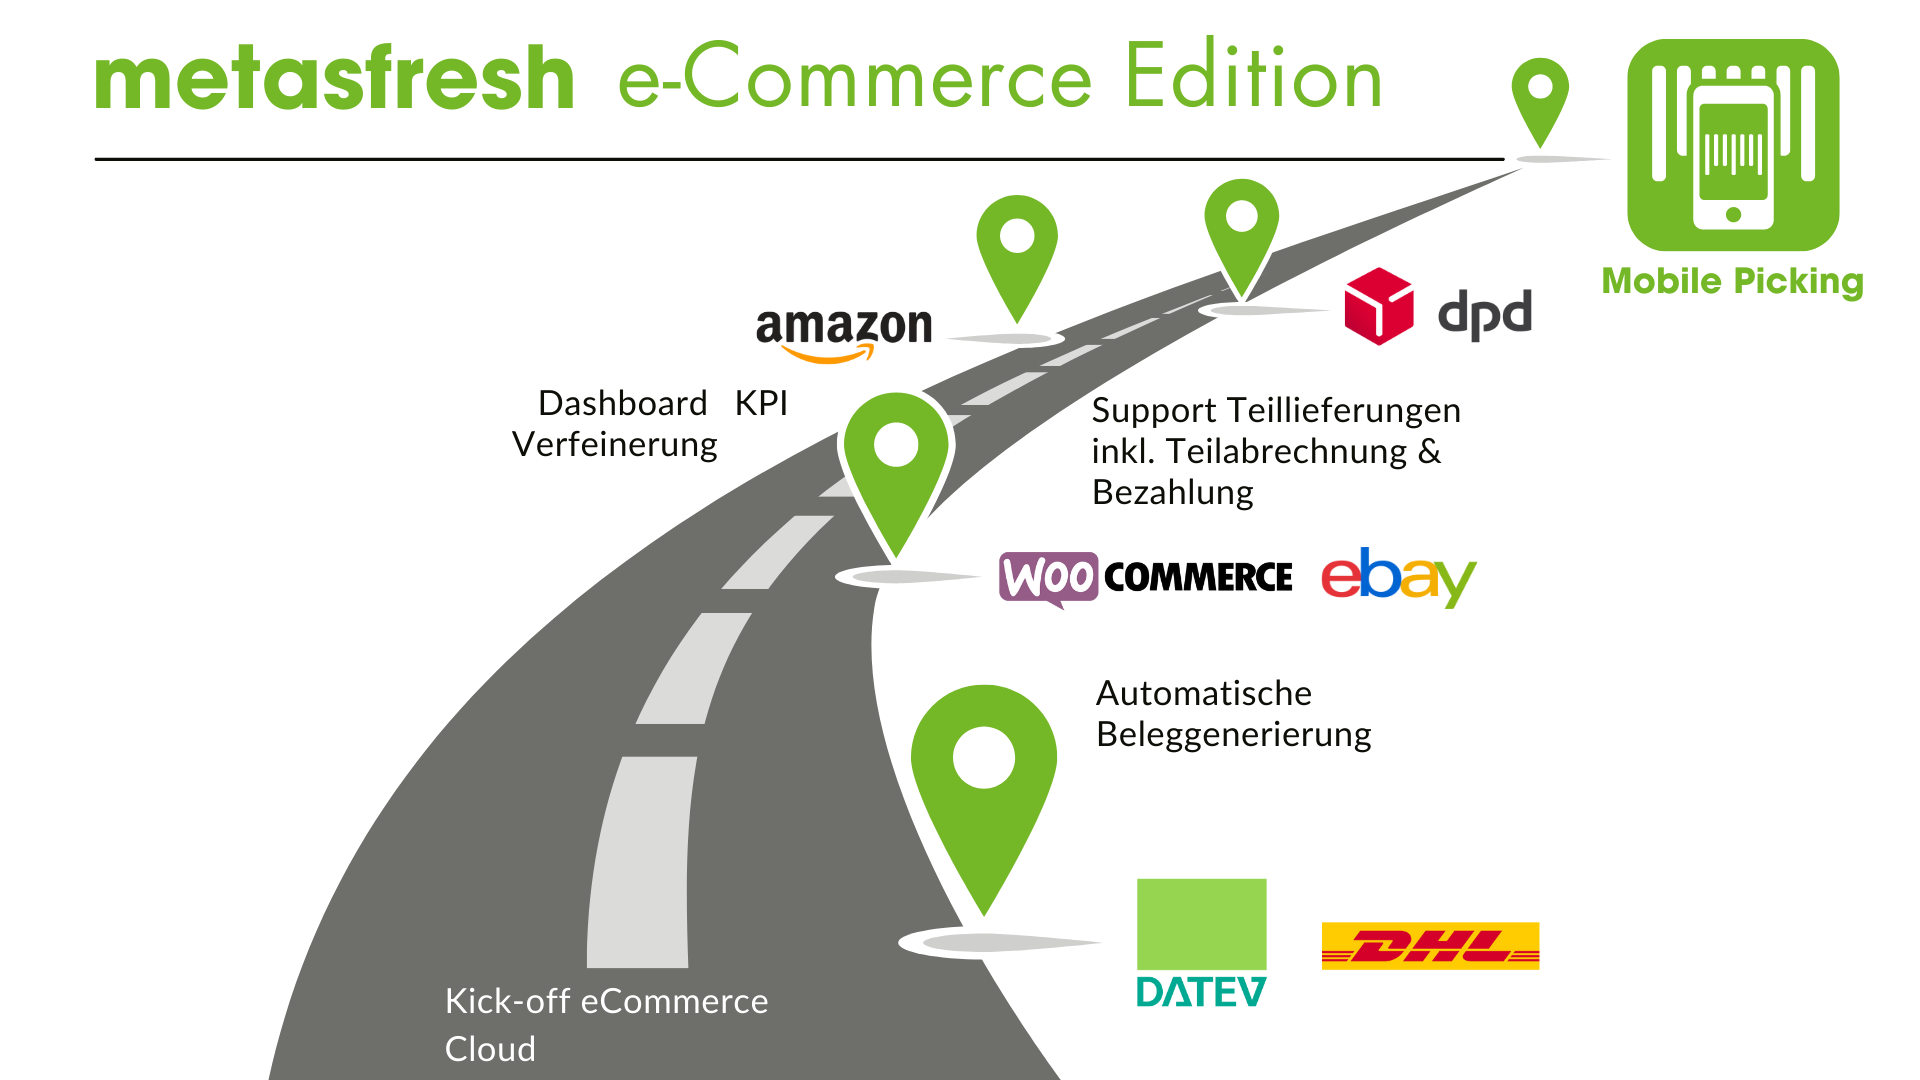 Rolling road map 2022 - metasfresh e-Commerce Edition